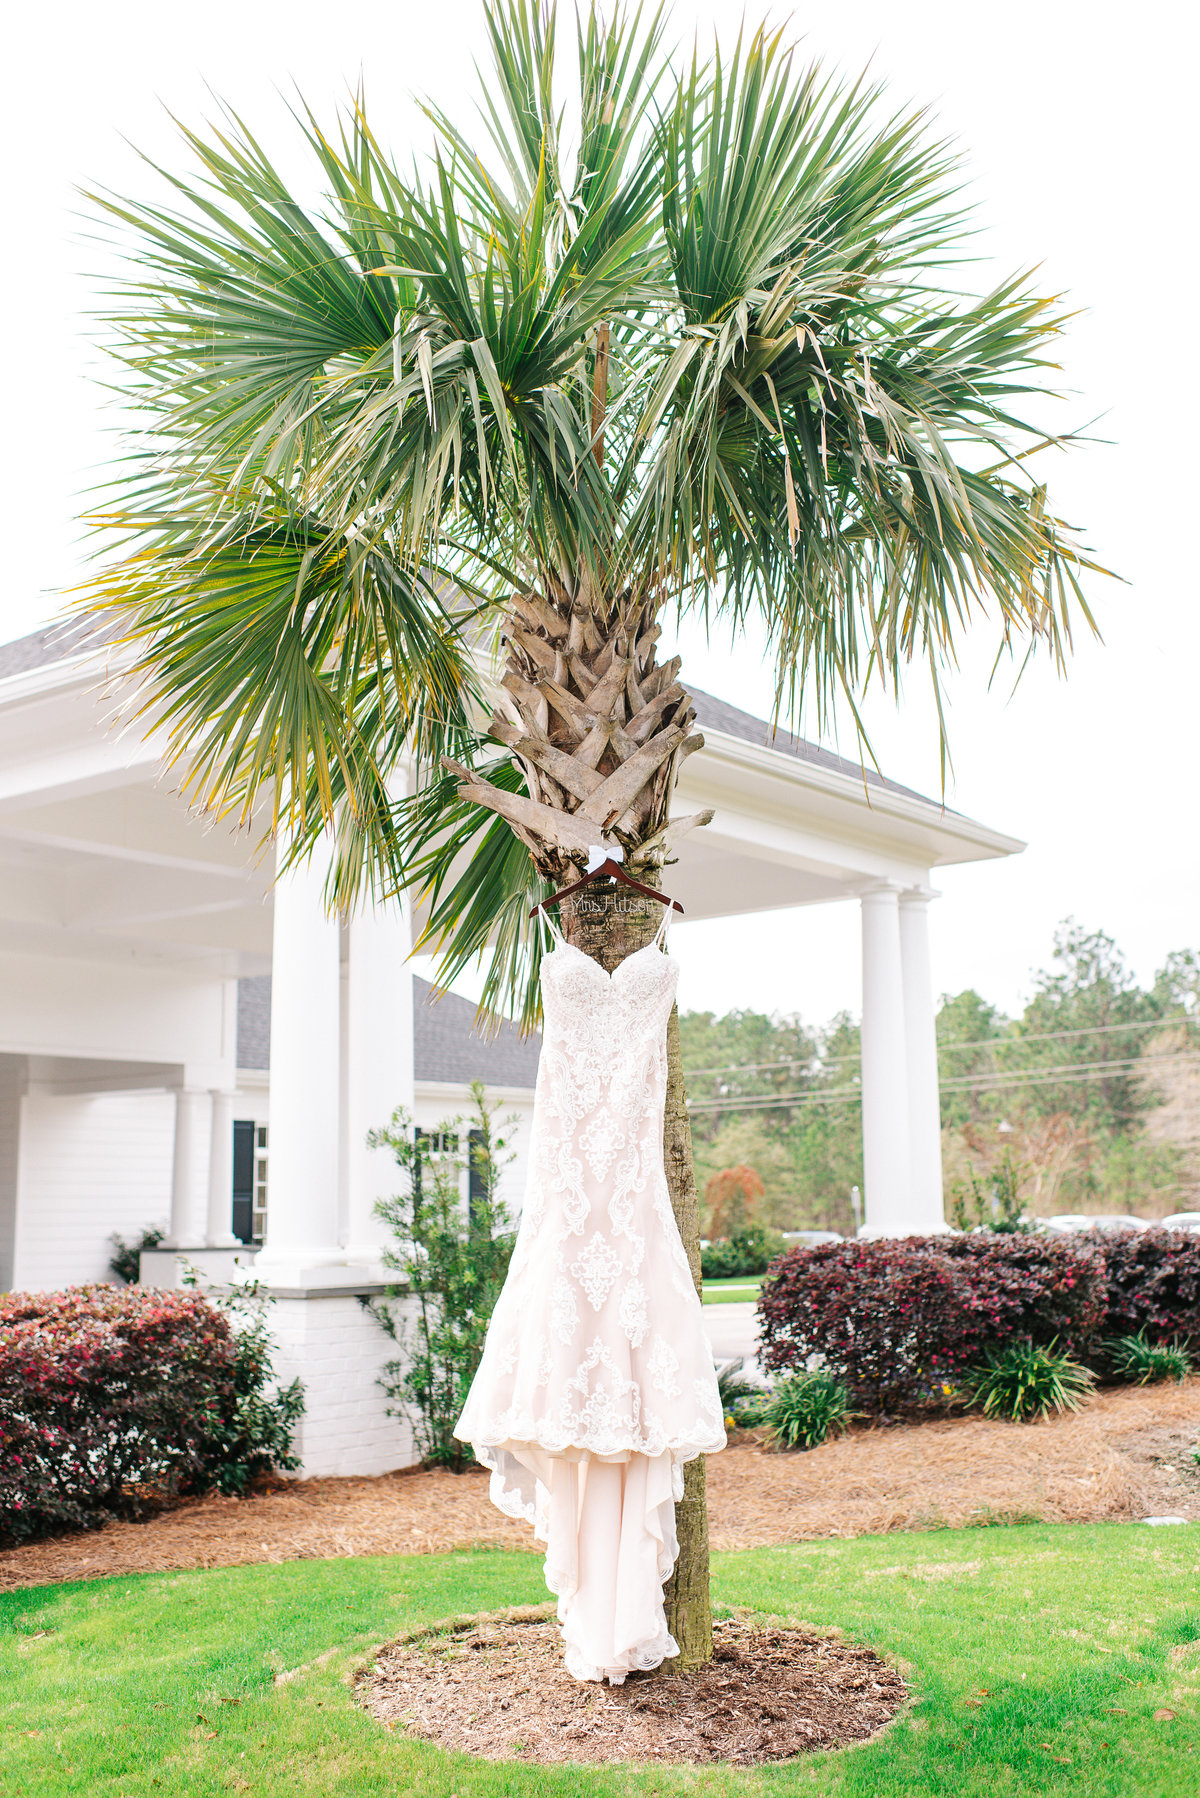 Dress hanging in palm tree at Reserve Club Wedding Aiken SC Phootgrapher